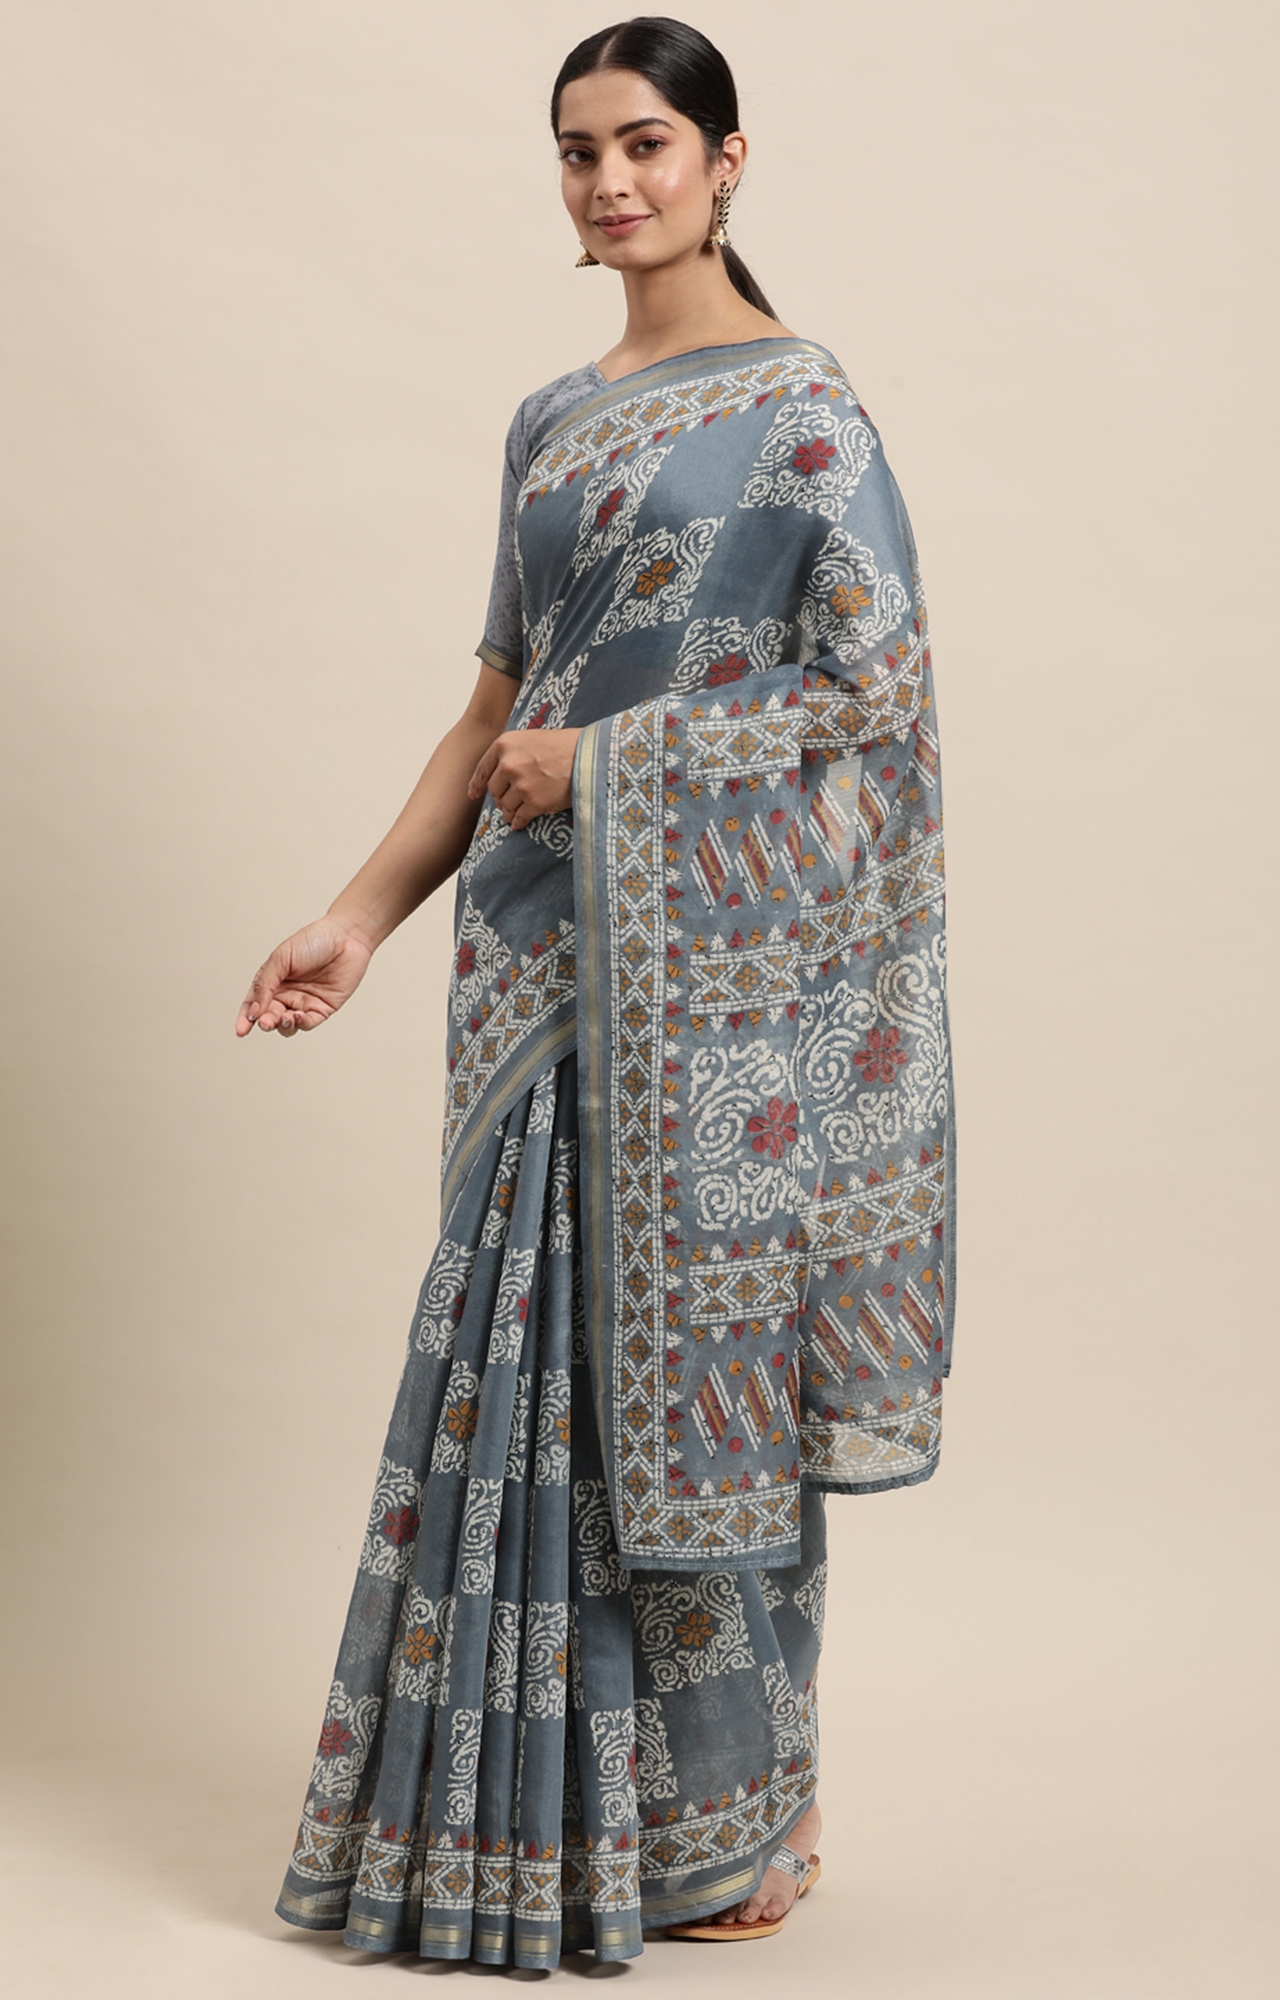 Shaily Women's Grey Cotton Linen Blend Printed Saree-HACTN0009GREY